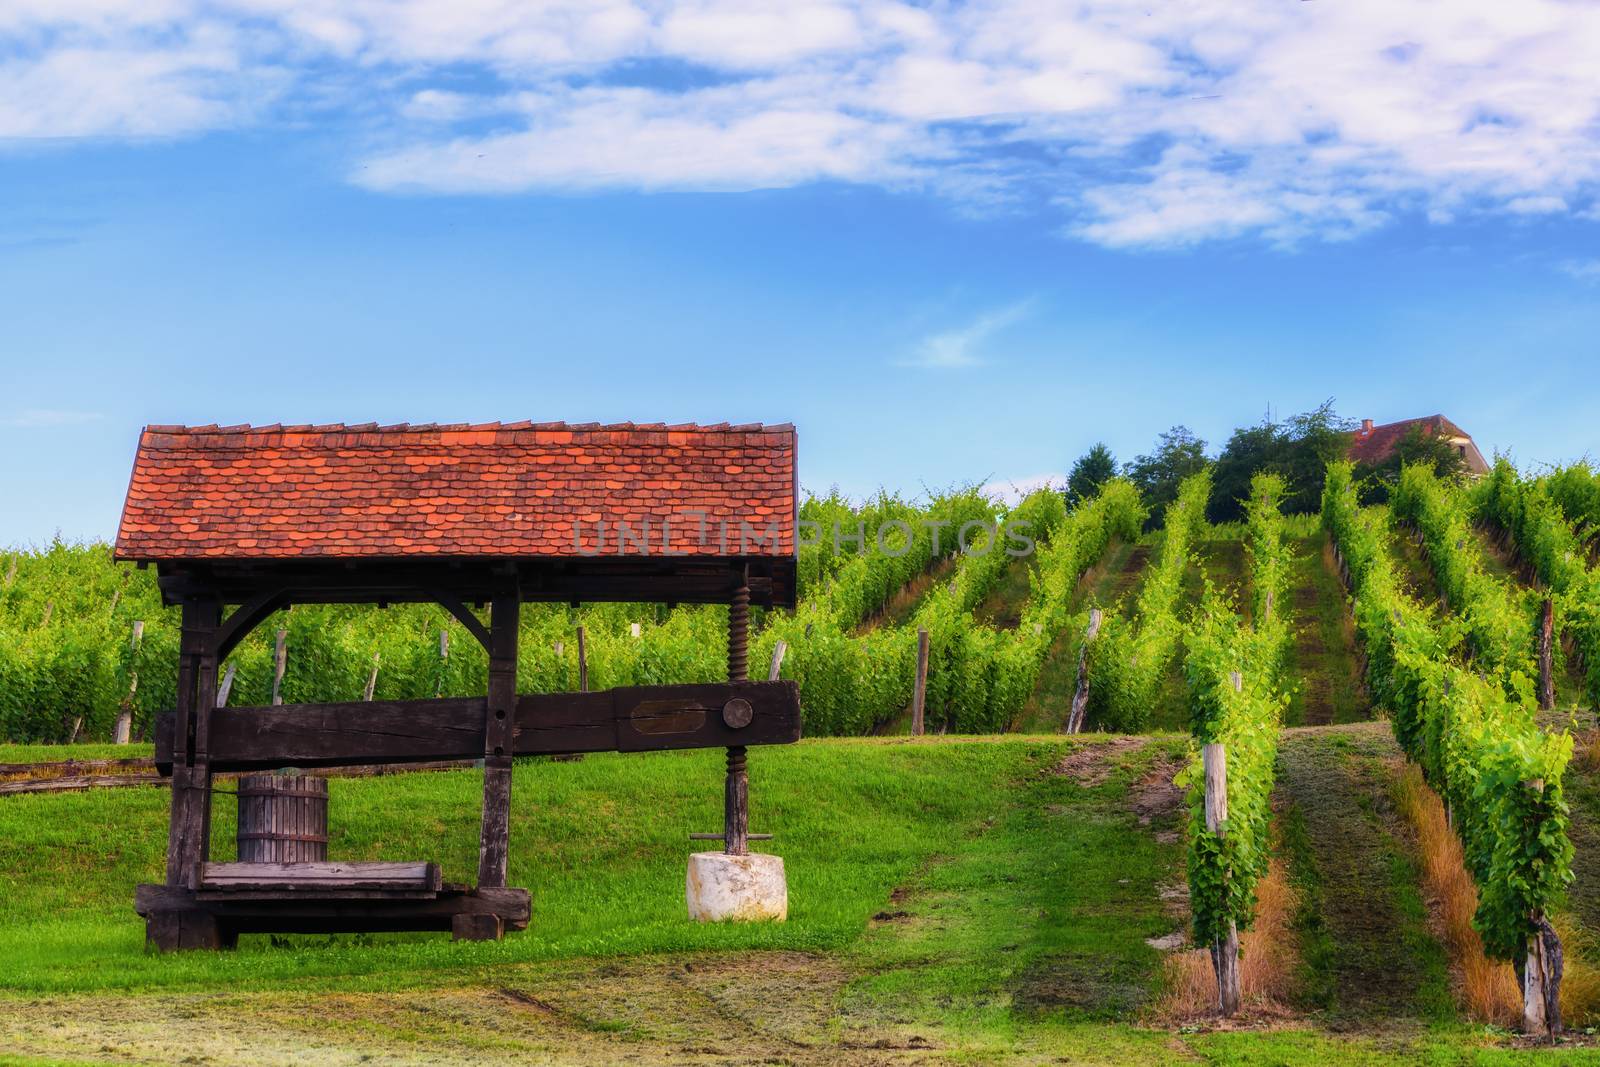 Traditional old grapes, vine press in vineyard, tourist attraction on the vine road in Slovenske Konjice, Slovenia